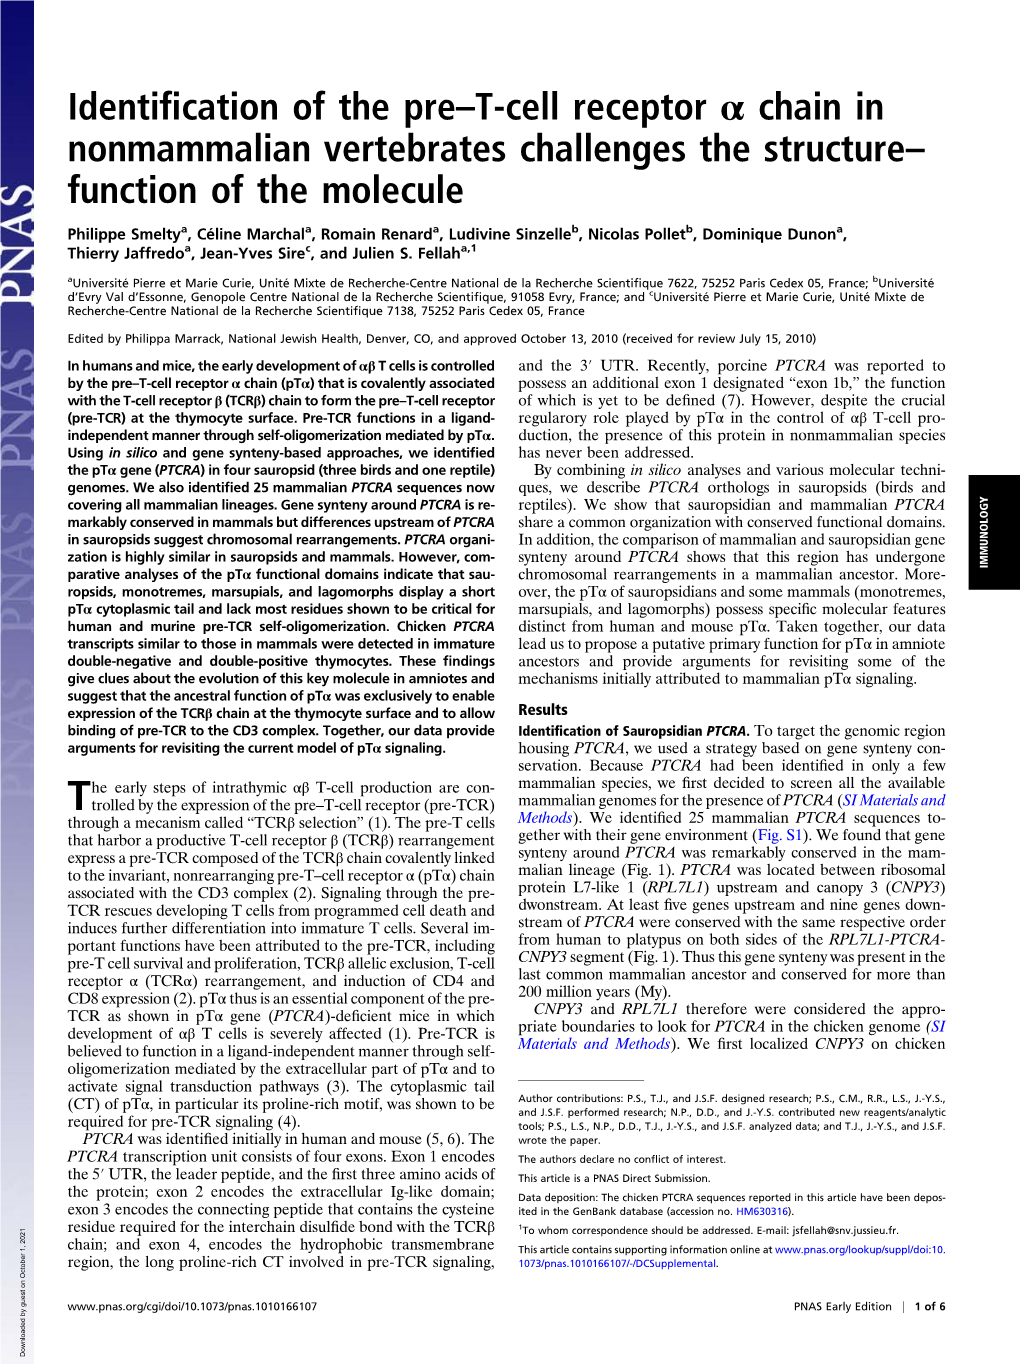 Identification of the Pre–T-Cell Receptor Α Chain in Nonmammalian